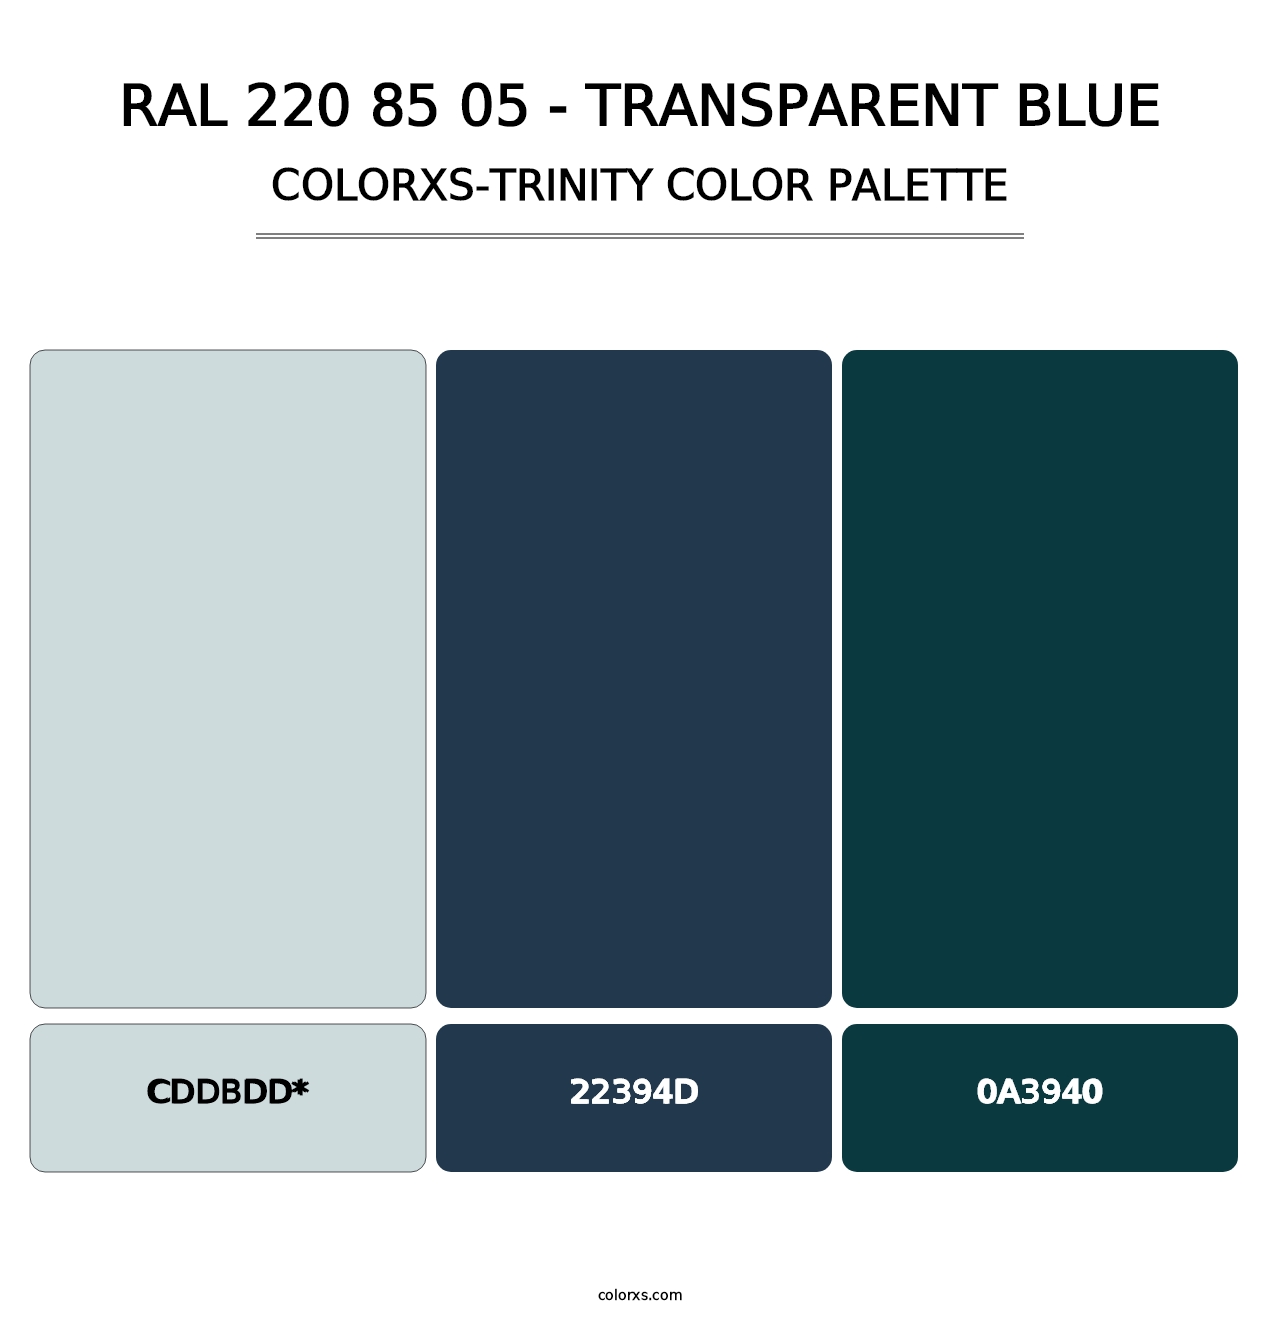 RAL 220 85 05 - Transparent Blue - Colorxs Trinity Palette